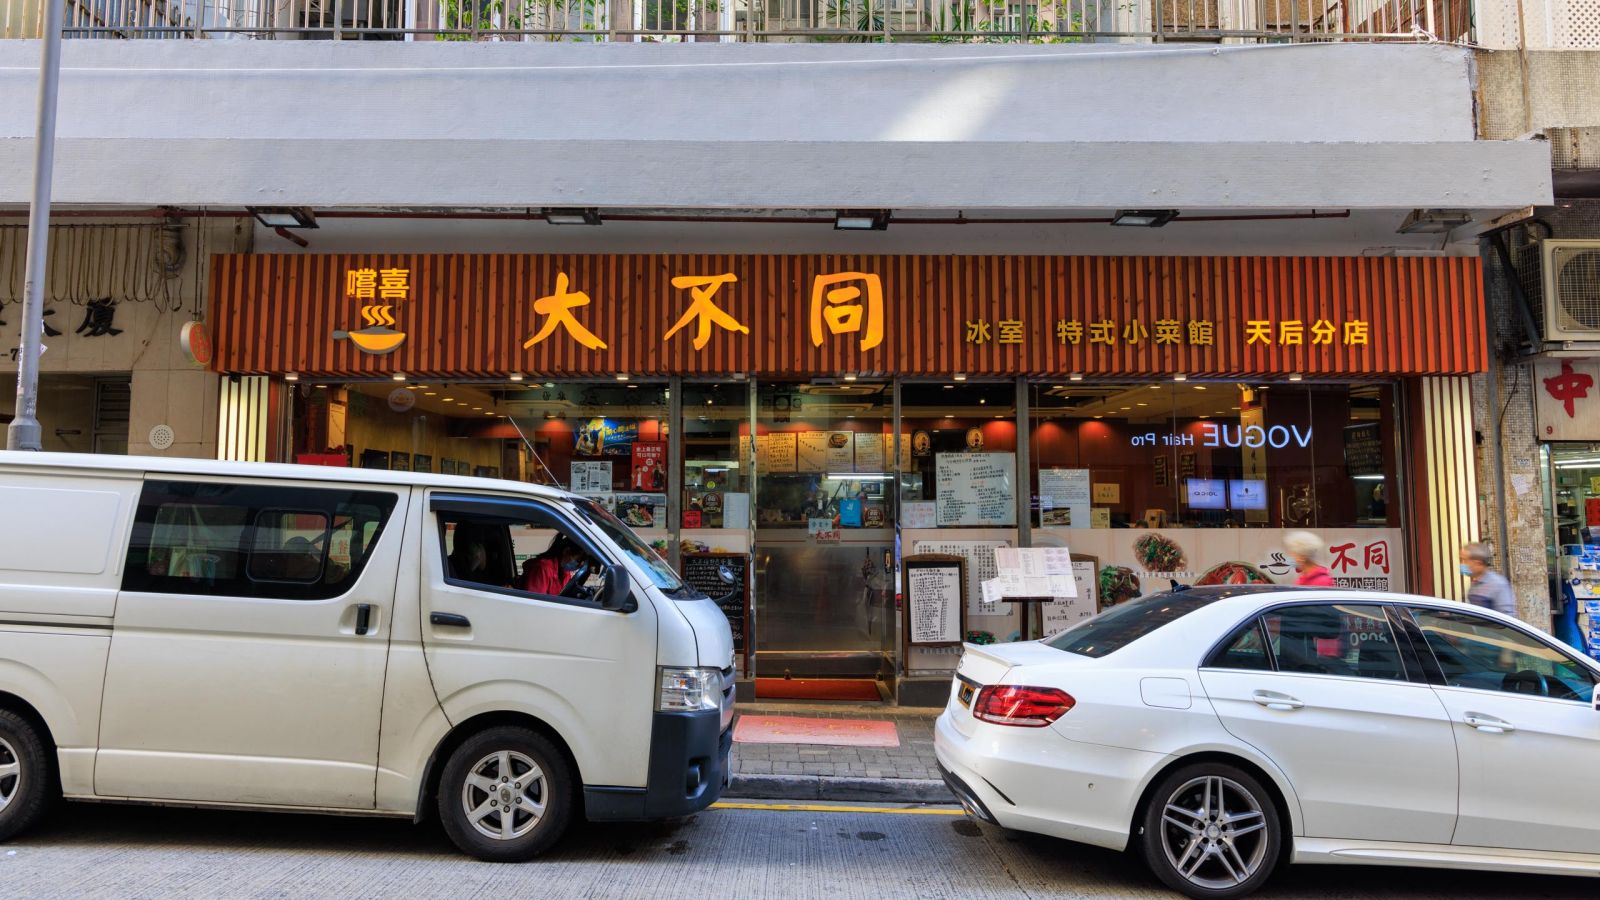 Sheung Hei Claypot restaurant with leon shop sign